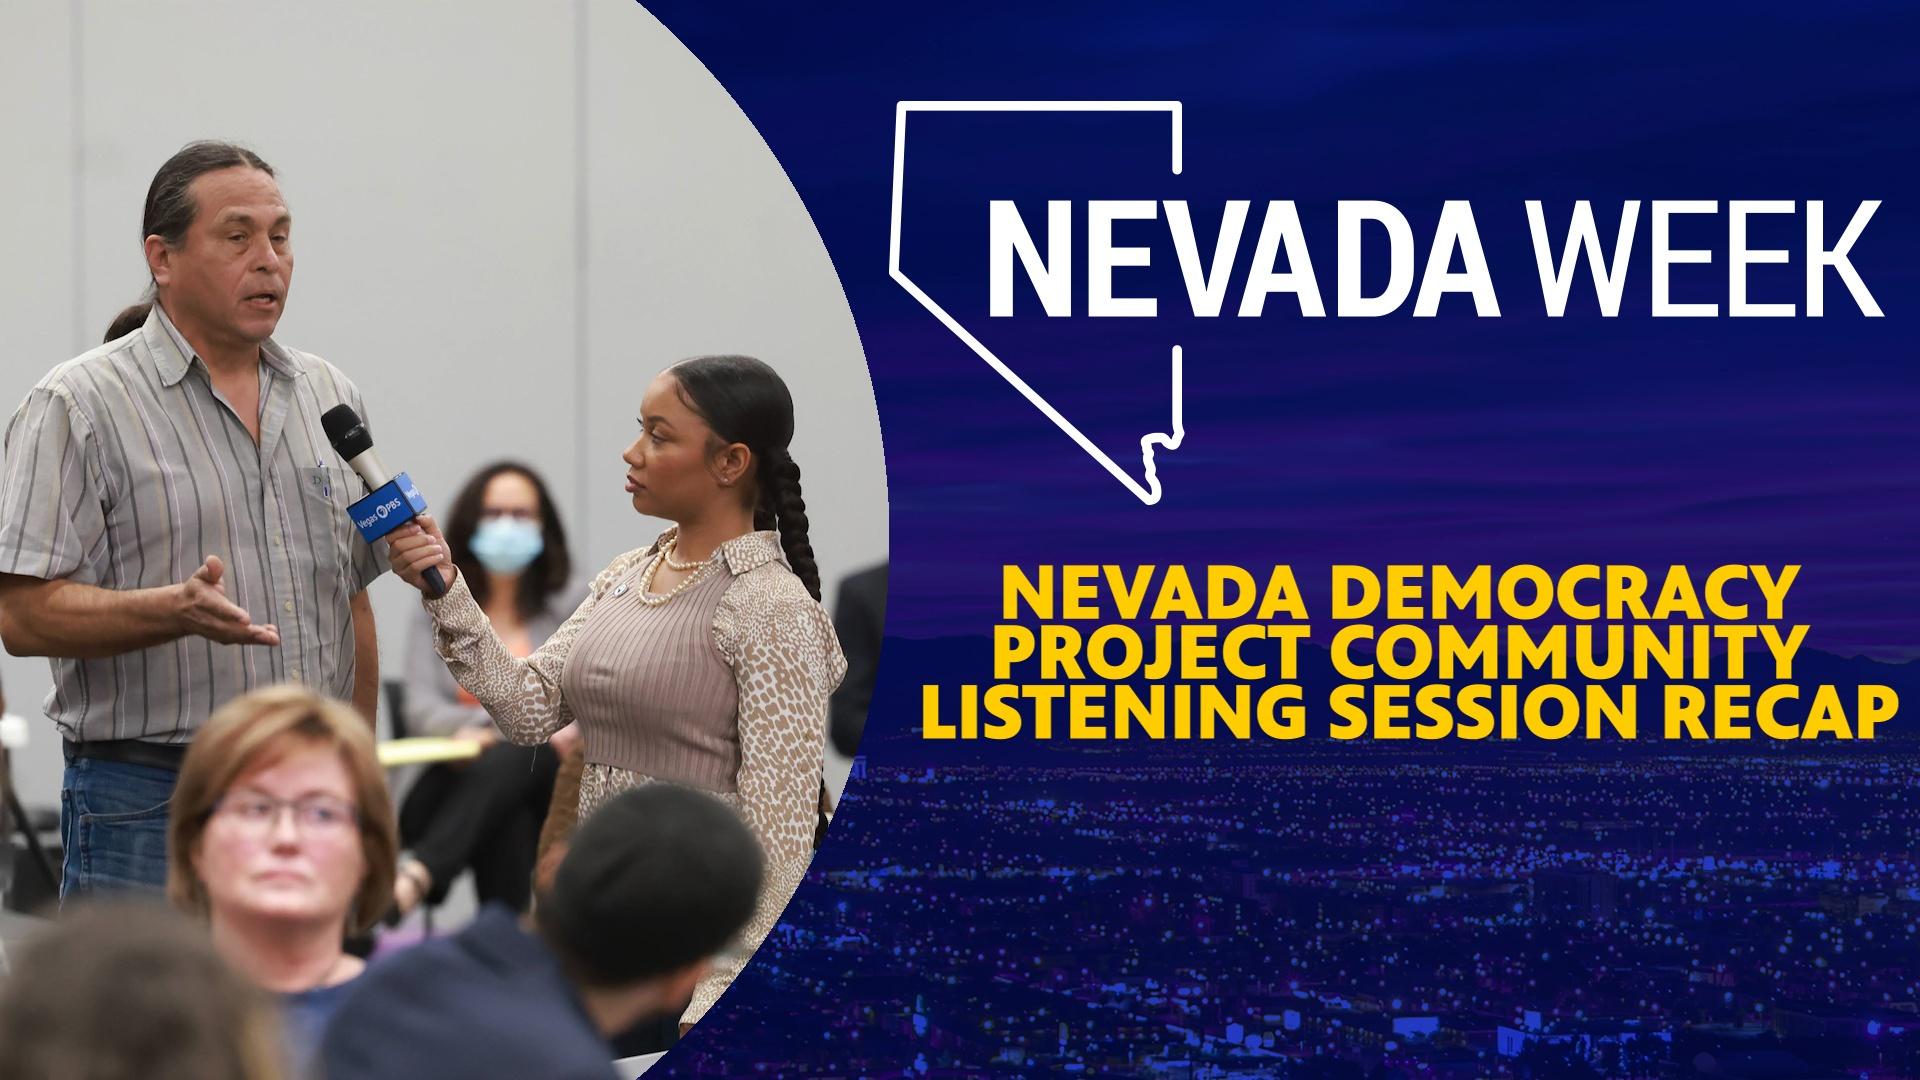 Nevada Democracy Project Community Listening Session Recap